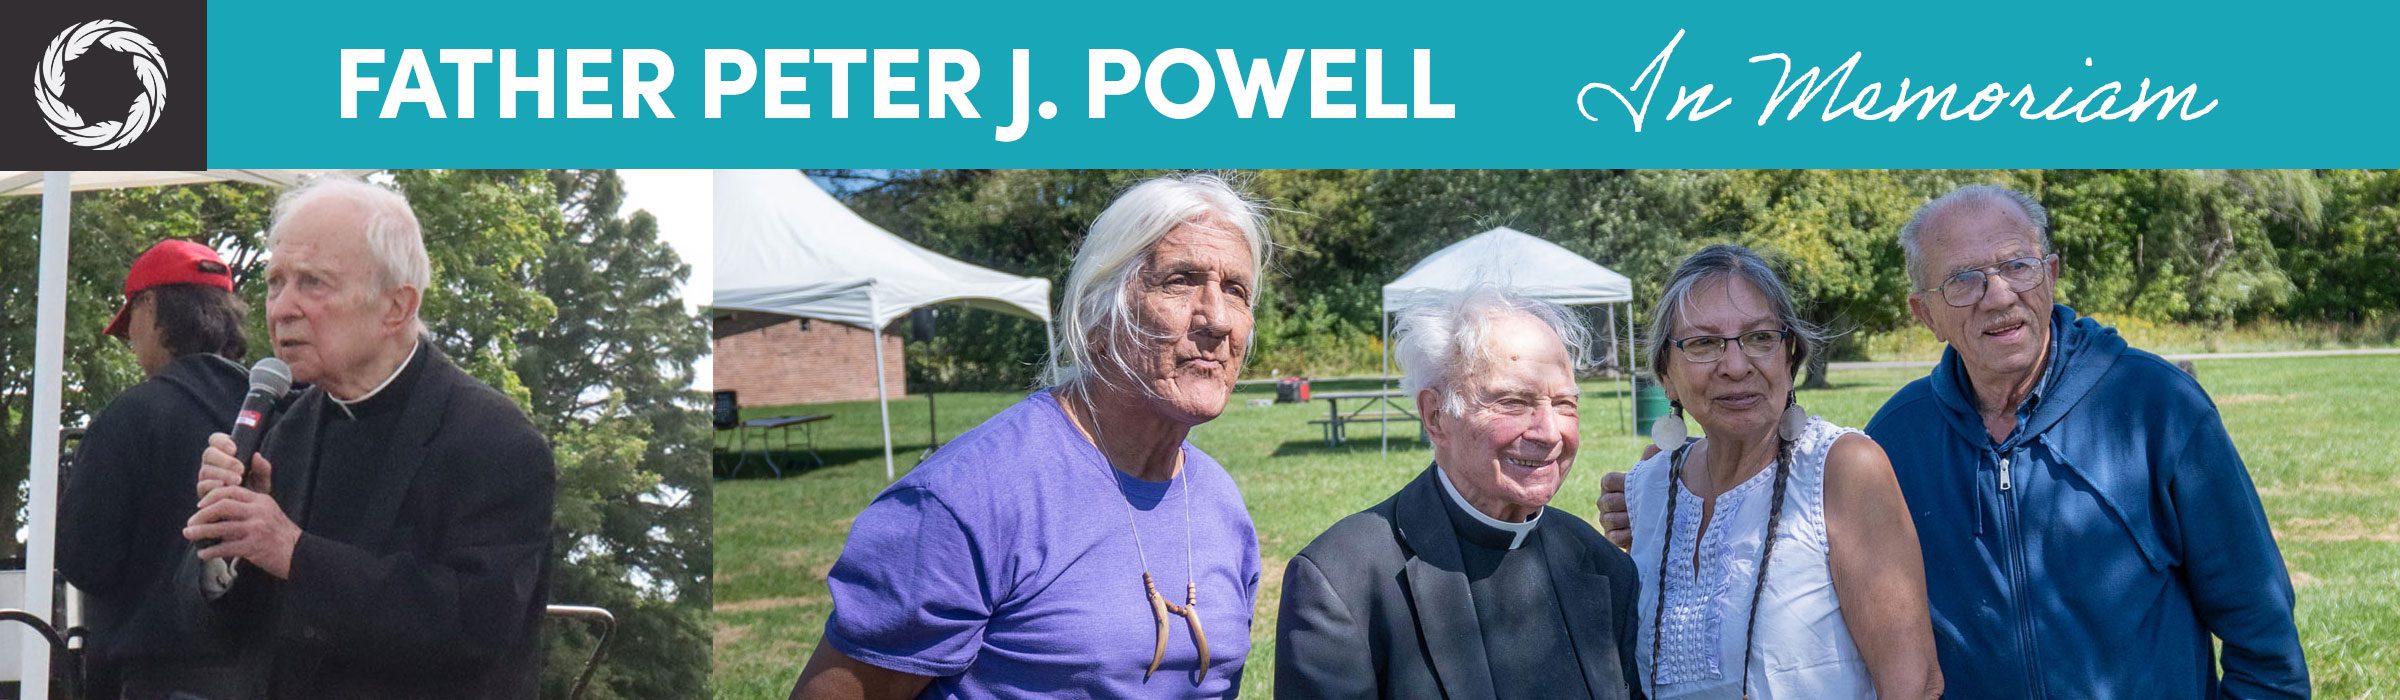 In Memoriam - Father Peter J. Powell